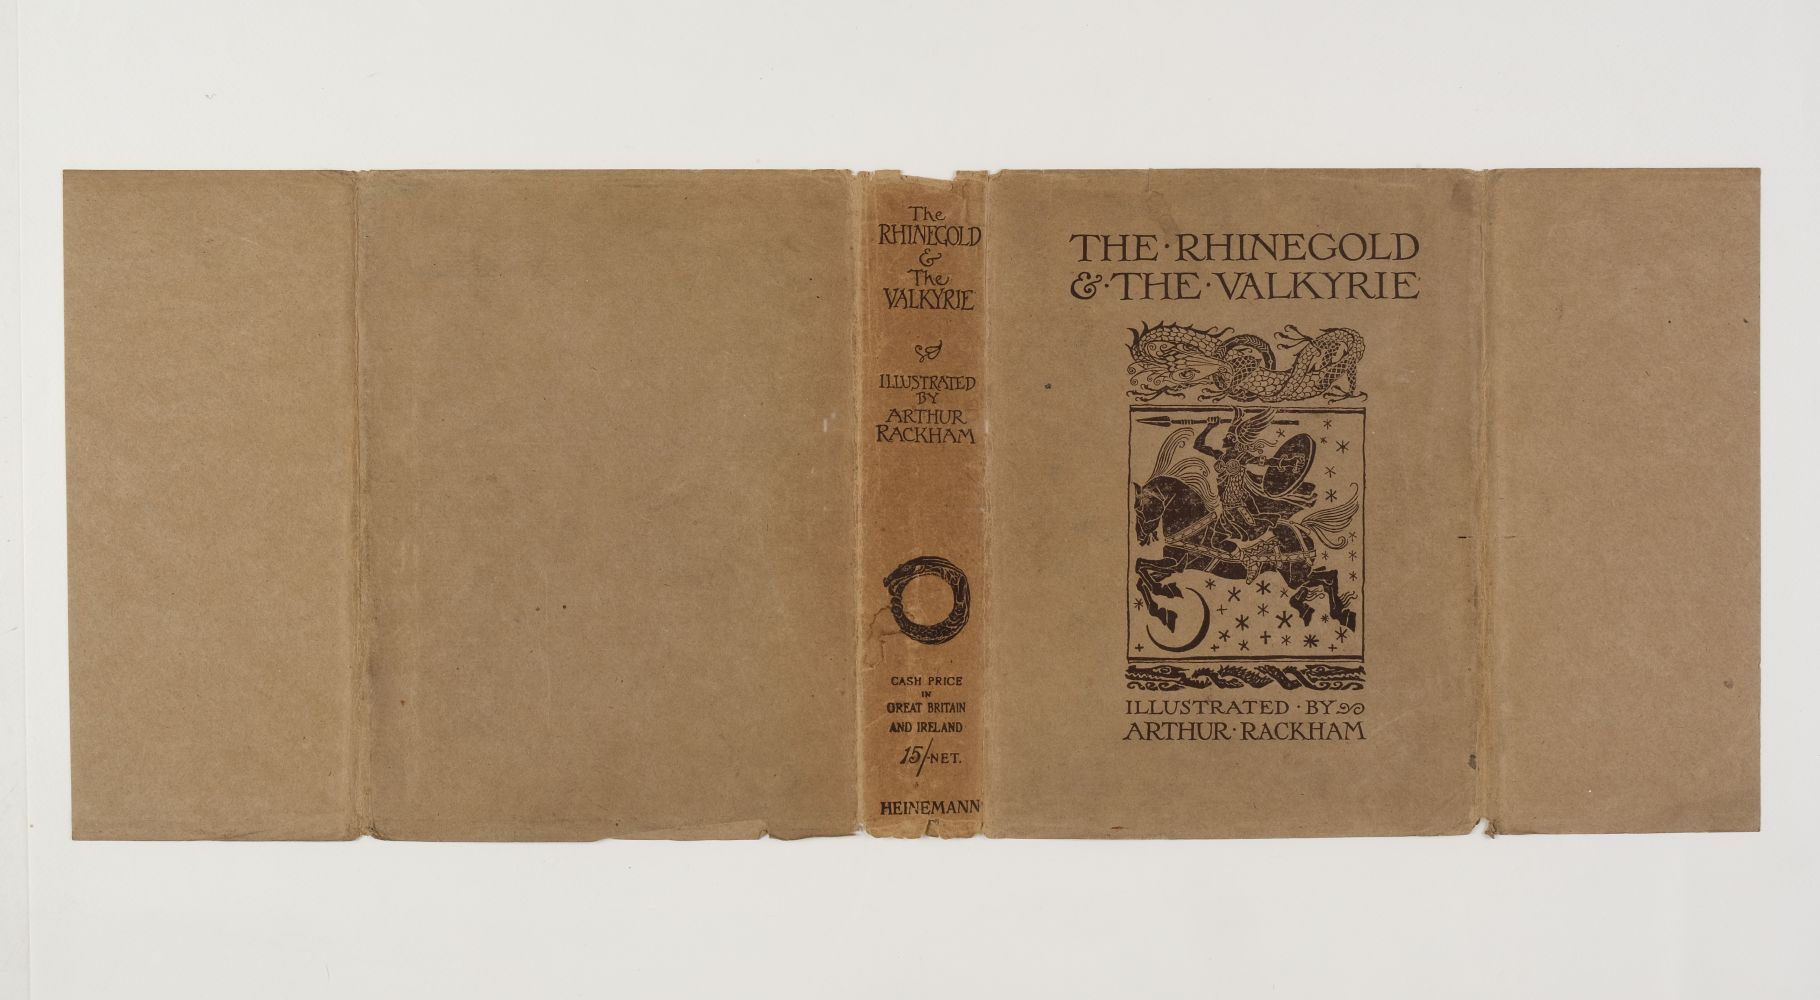 Rackham (Arthur, illustrator). The Rhinegold & The Valkyrie, London: William Heinemann, 1910 - Image 3 of 5